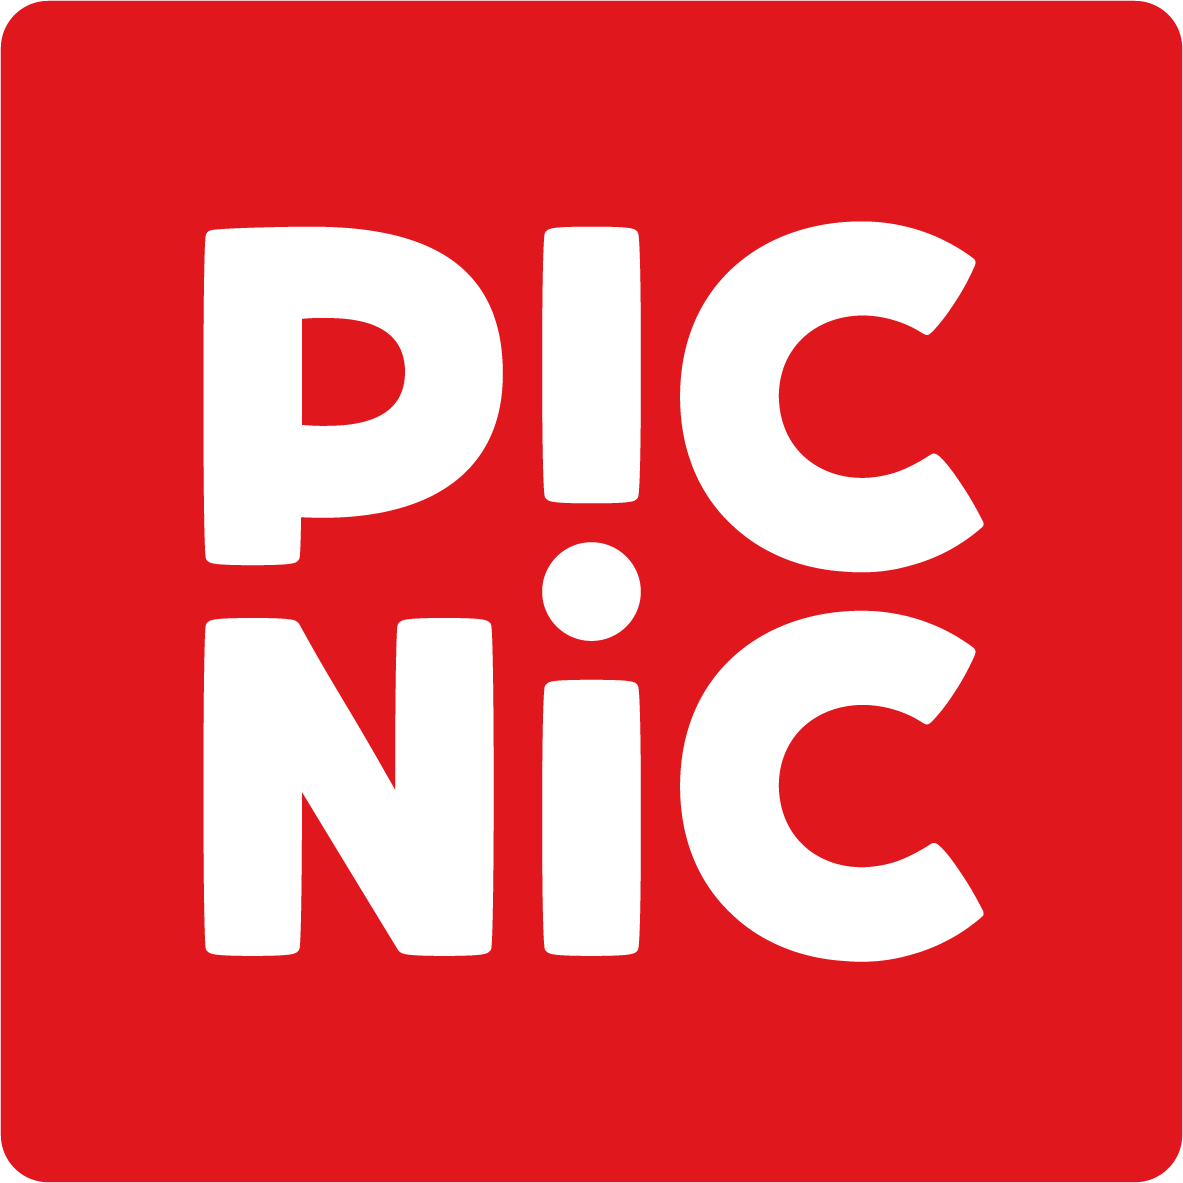 PicNic logo